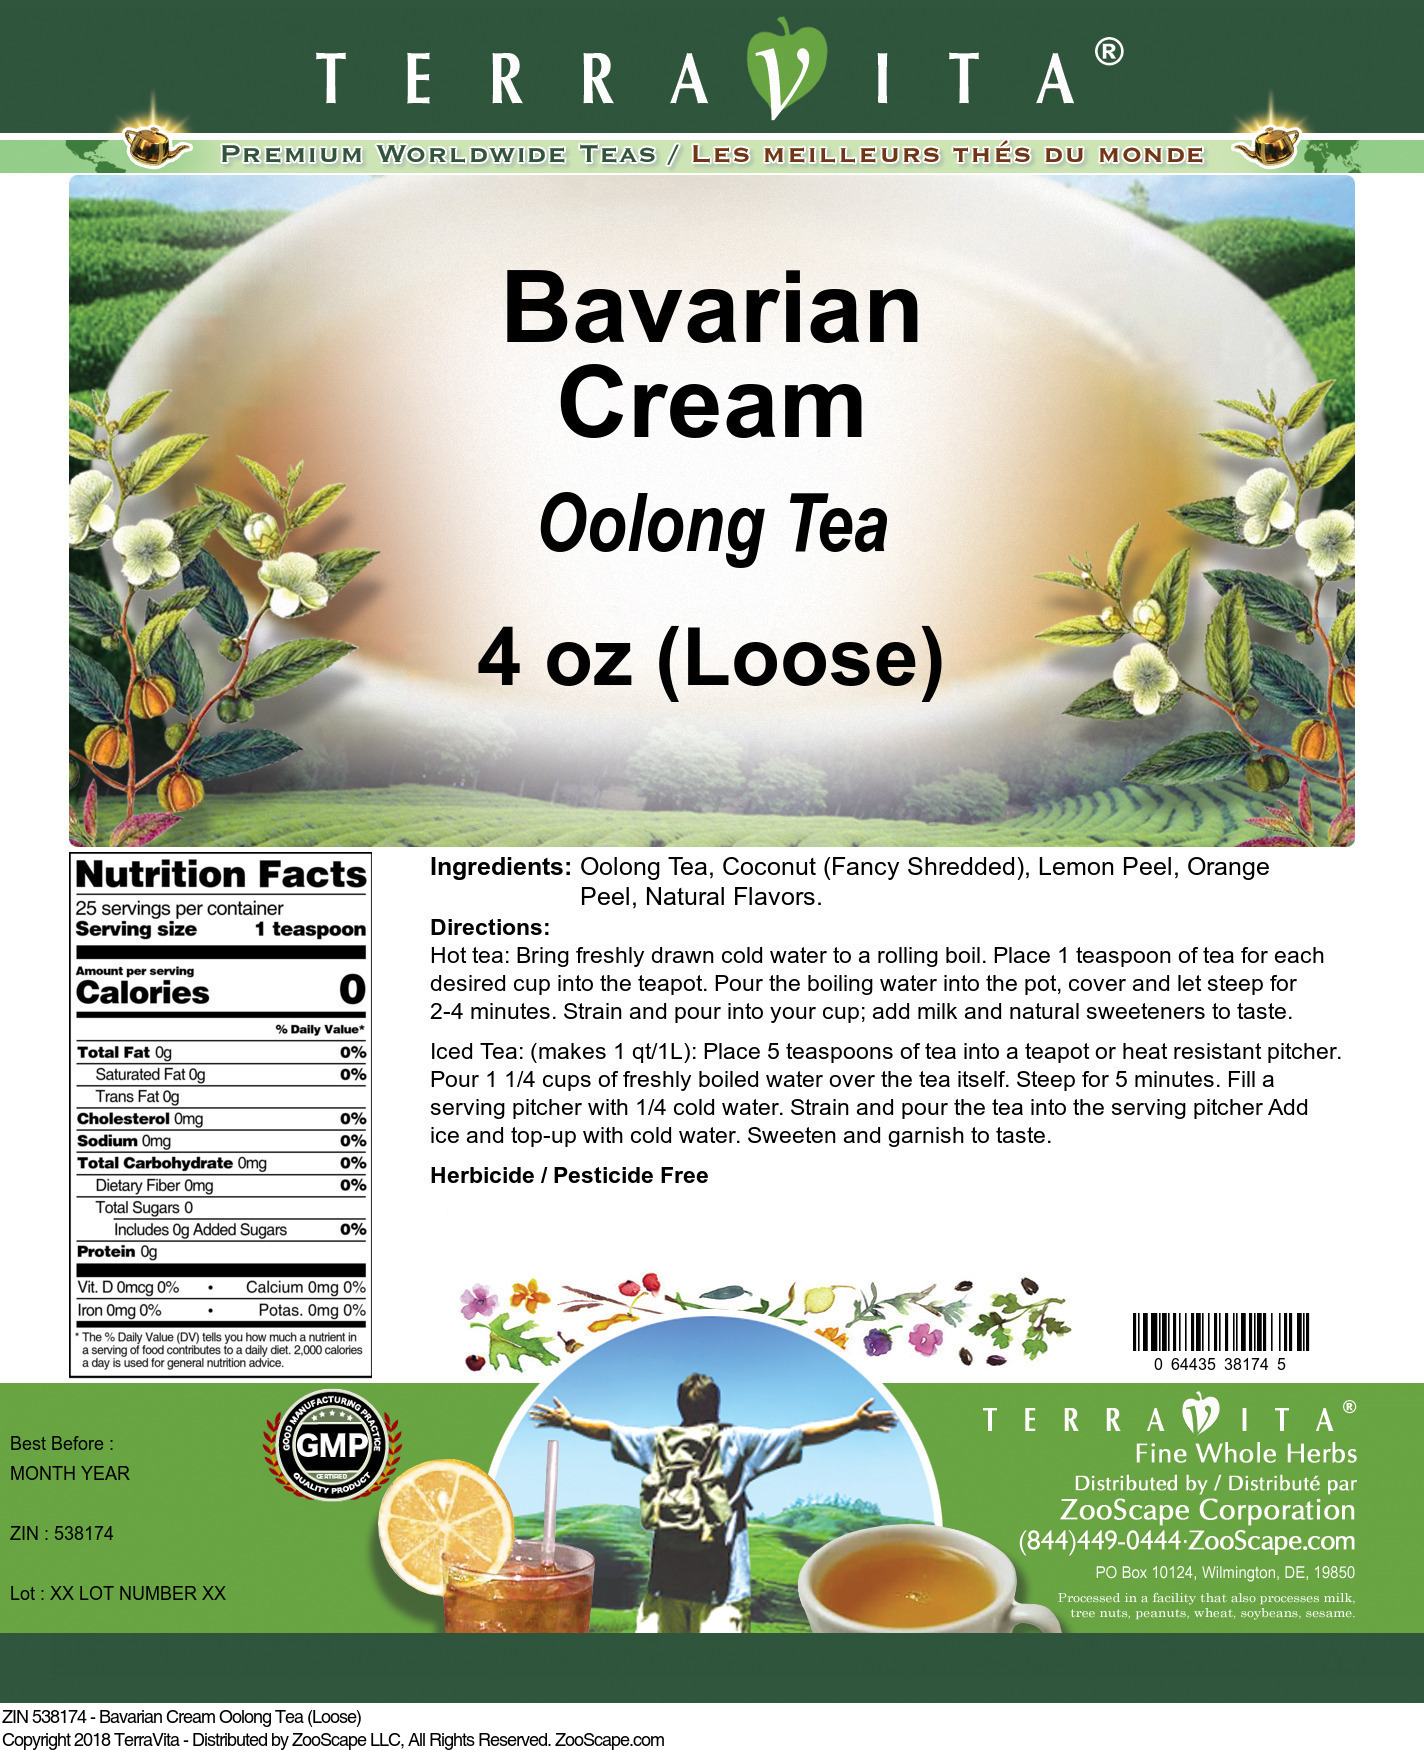 Bavarian Cream Oolong Tea (Loose) - Label